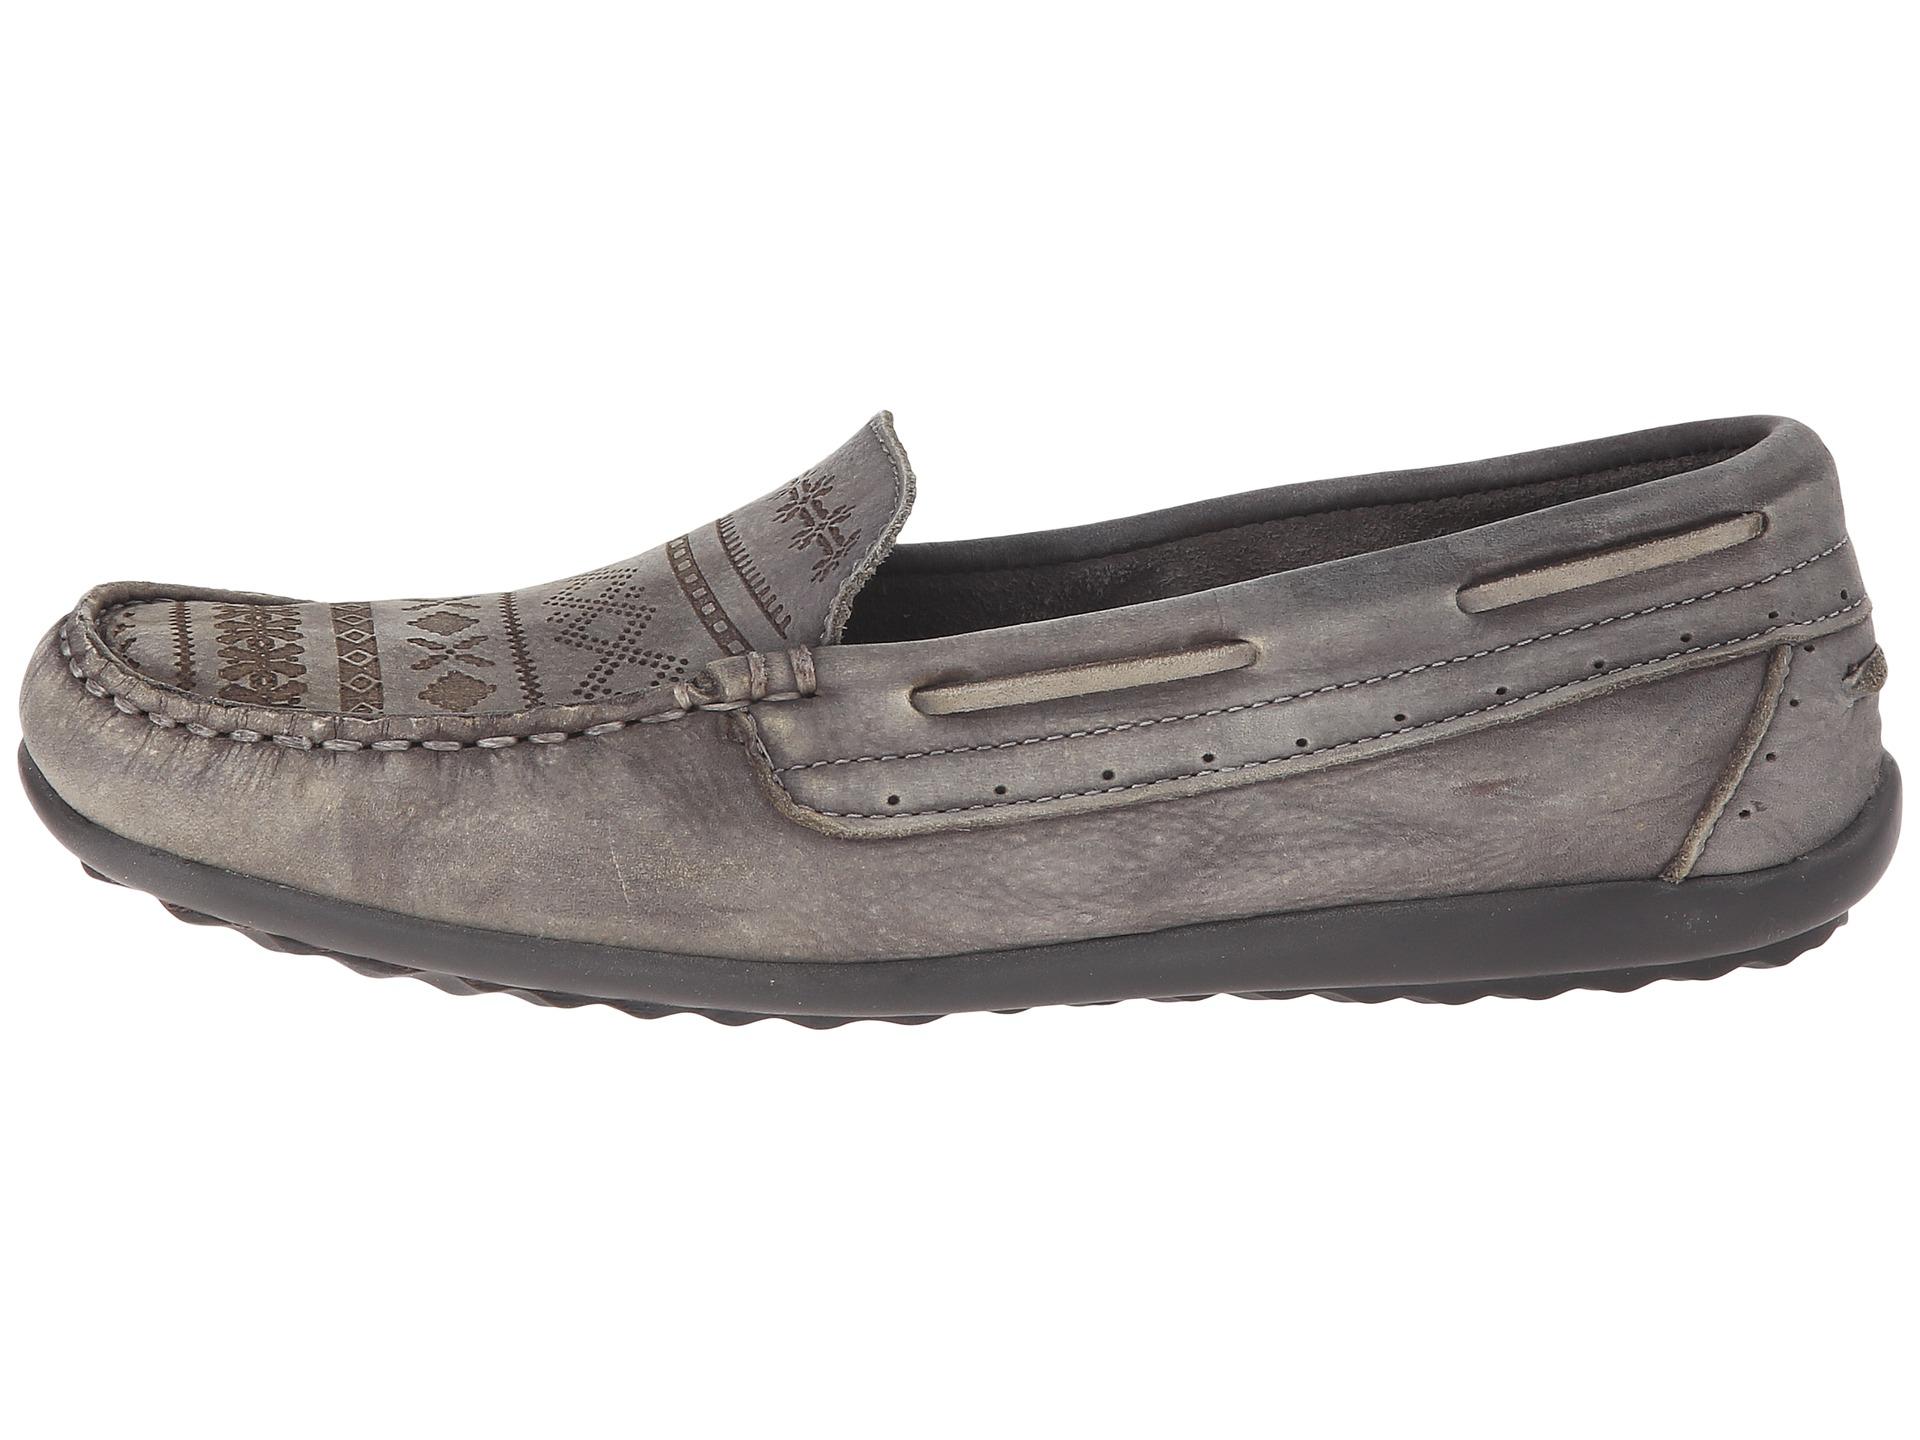 Lyst Taos Footwear Heritage in Gray for Men